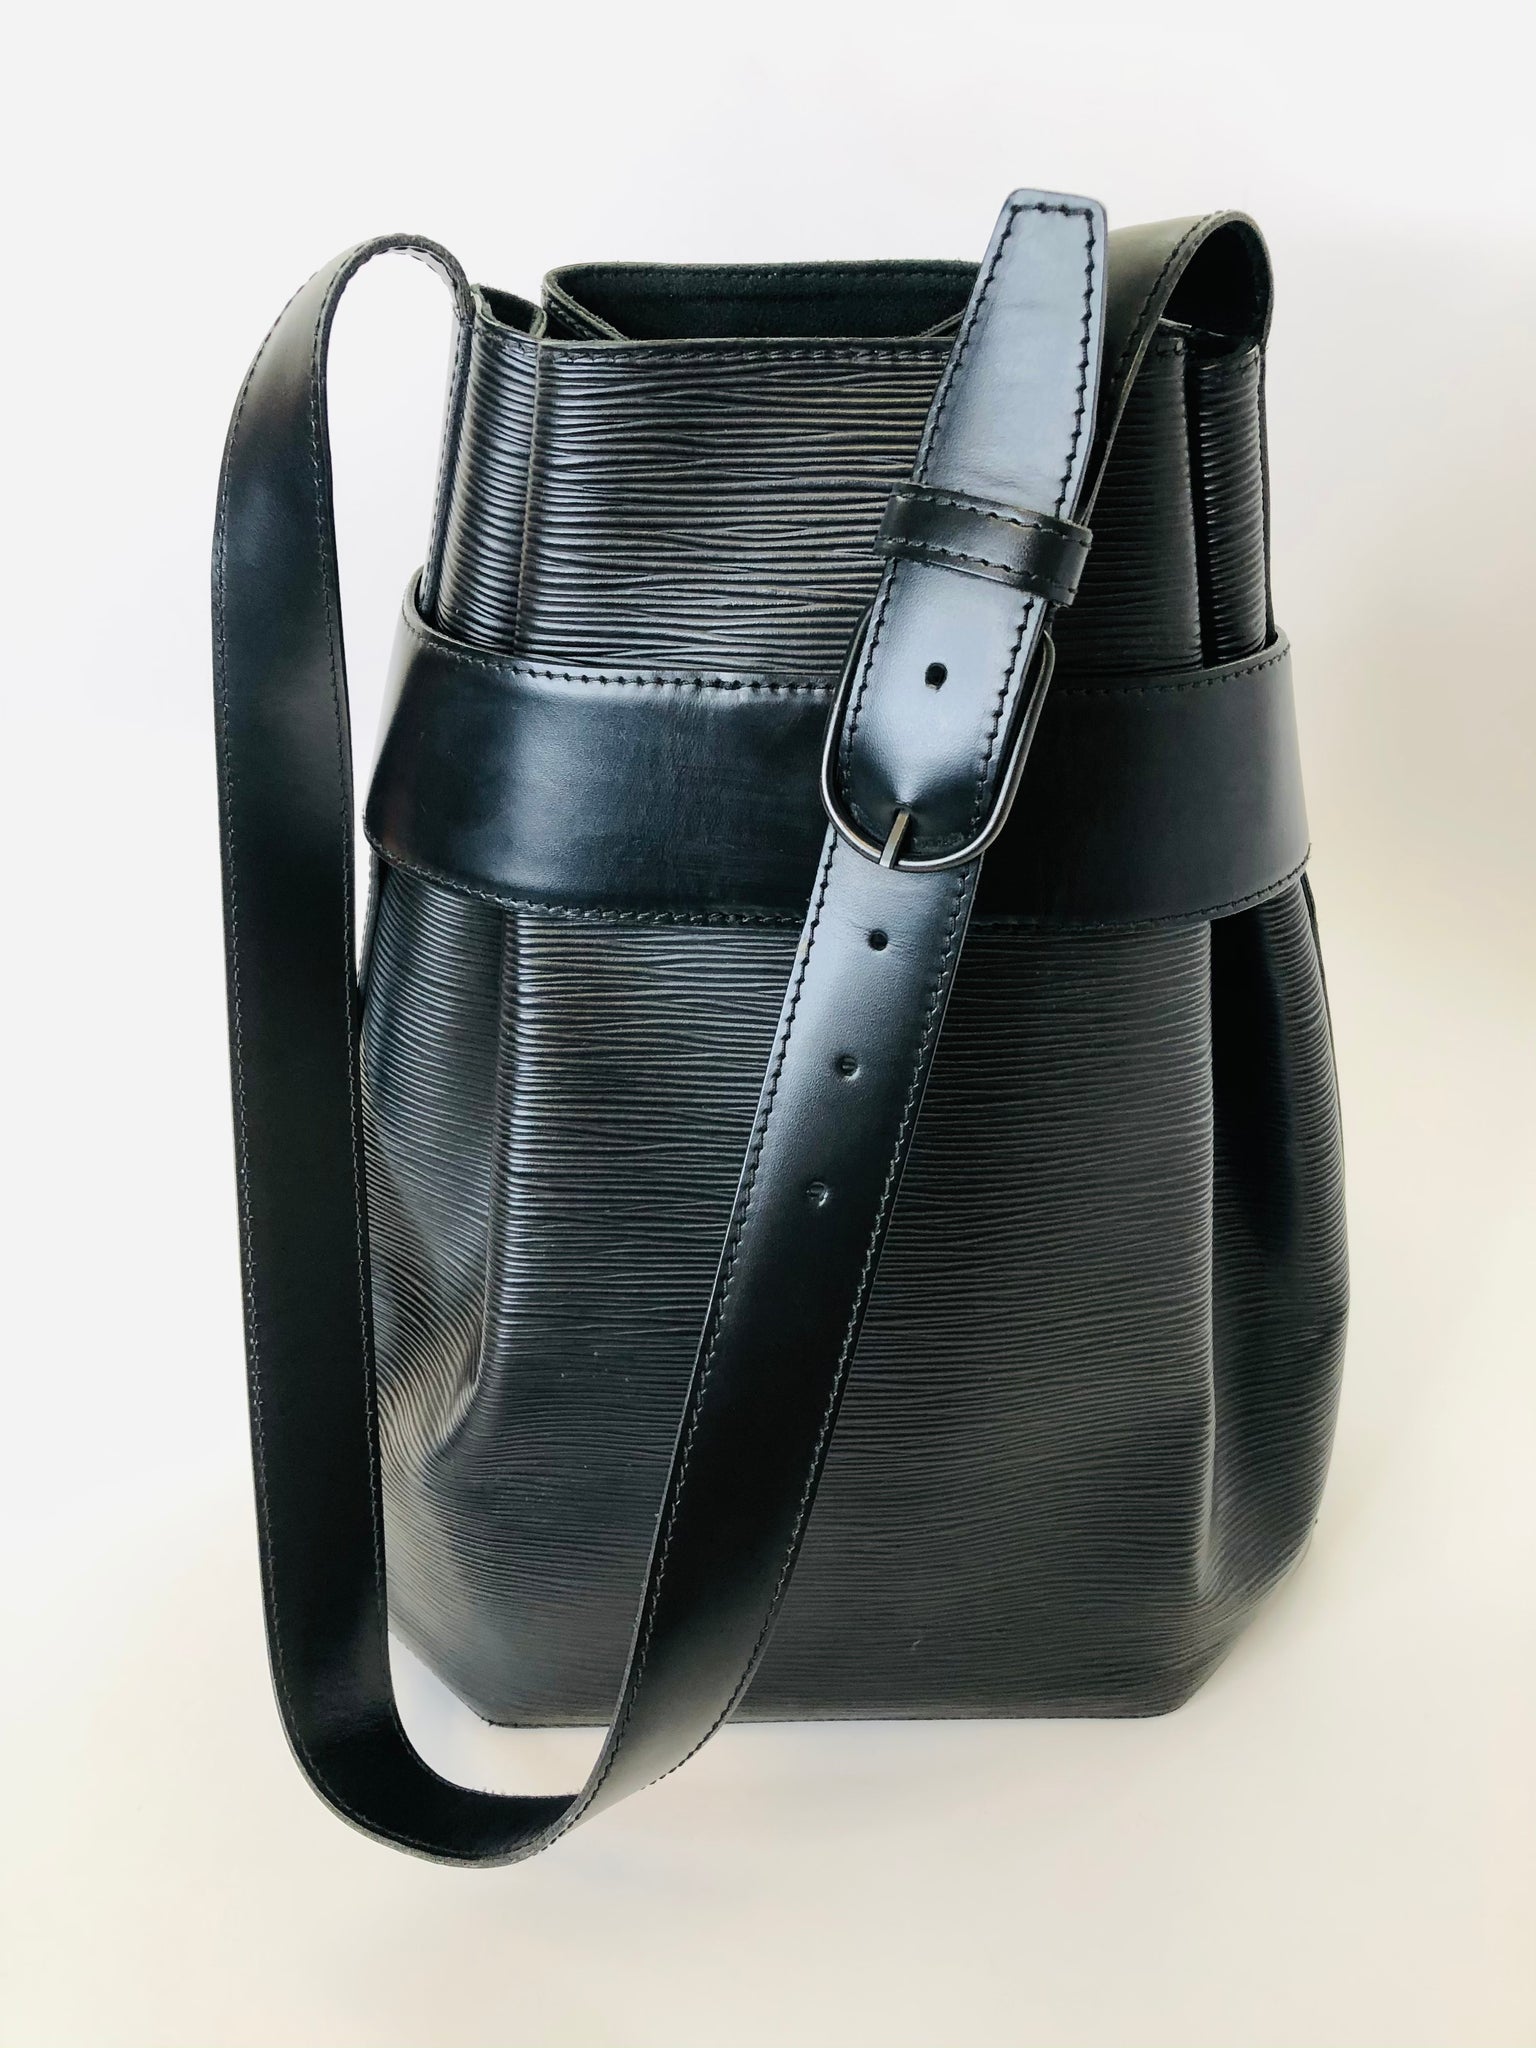 Louis Vuitton Sac d'épaule Handbag 340472